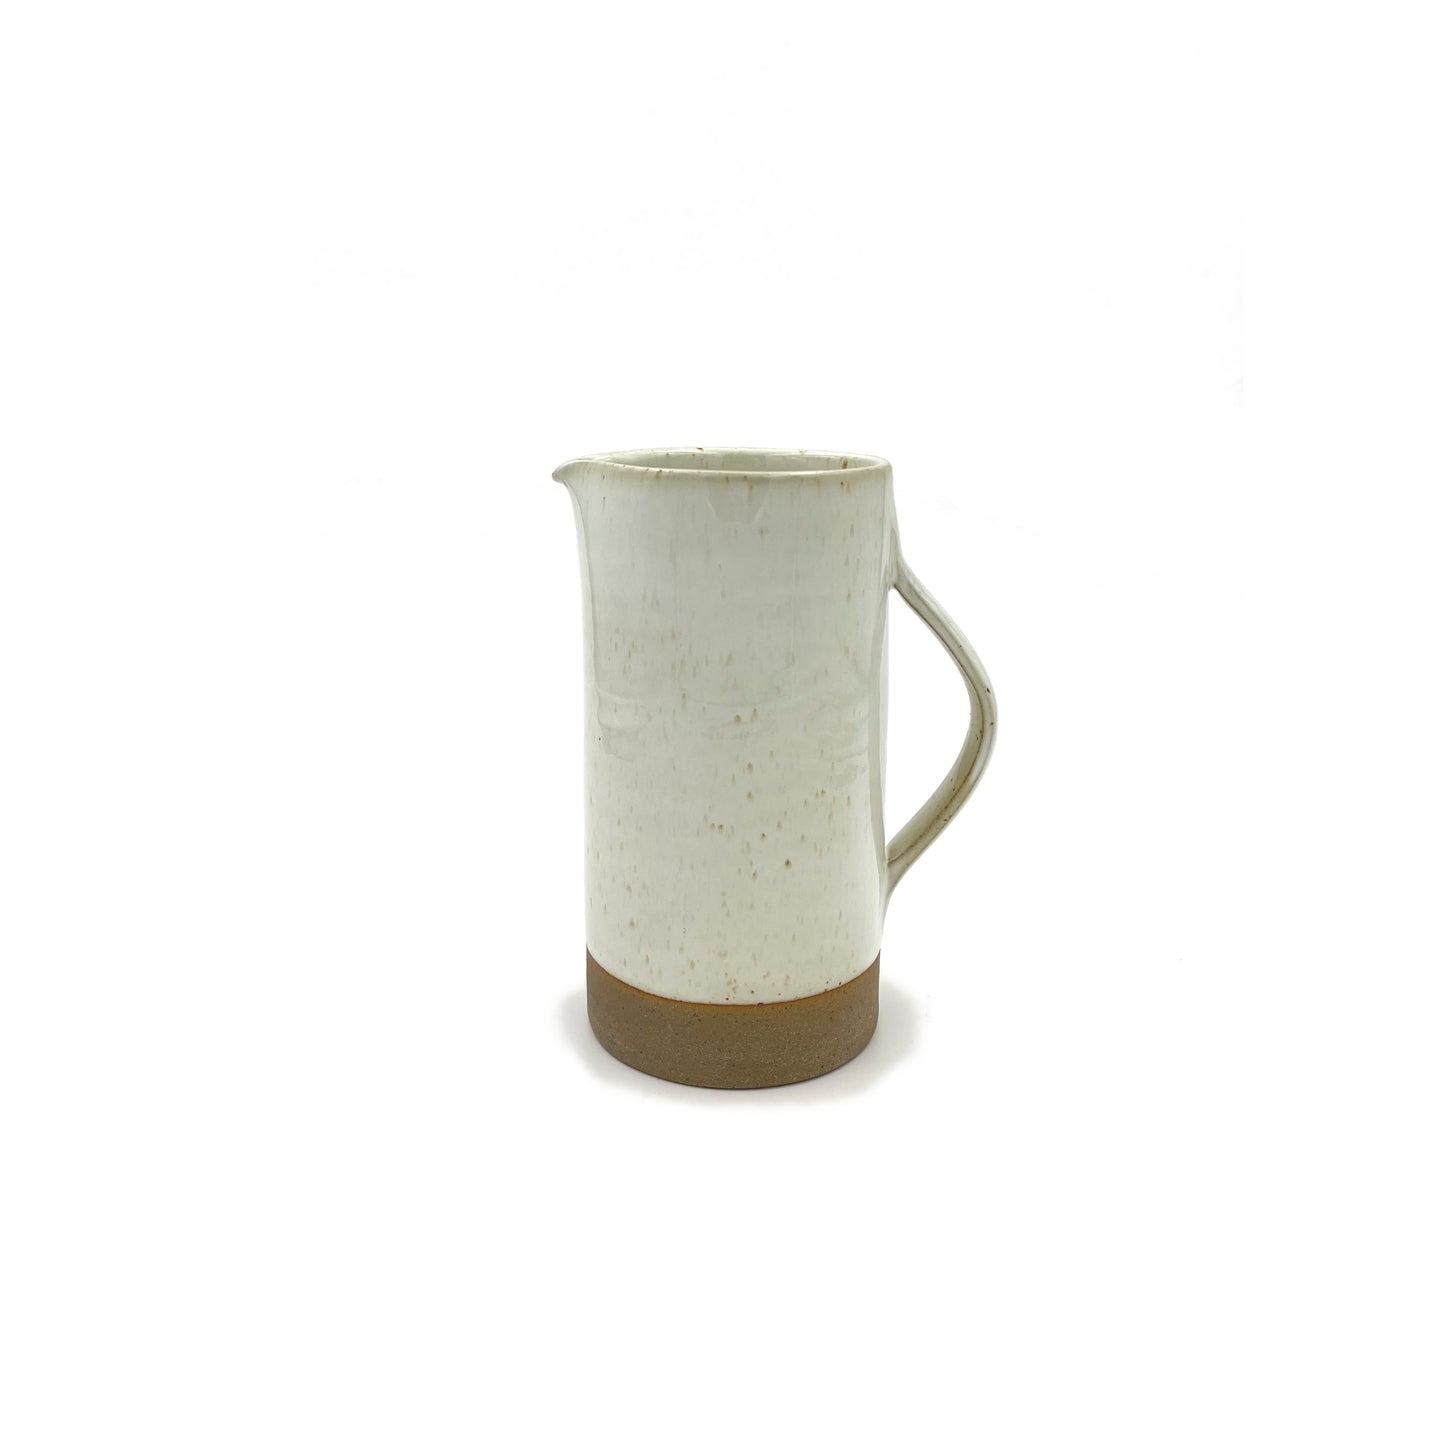 French stoneware jug